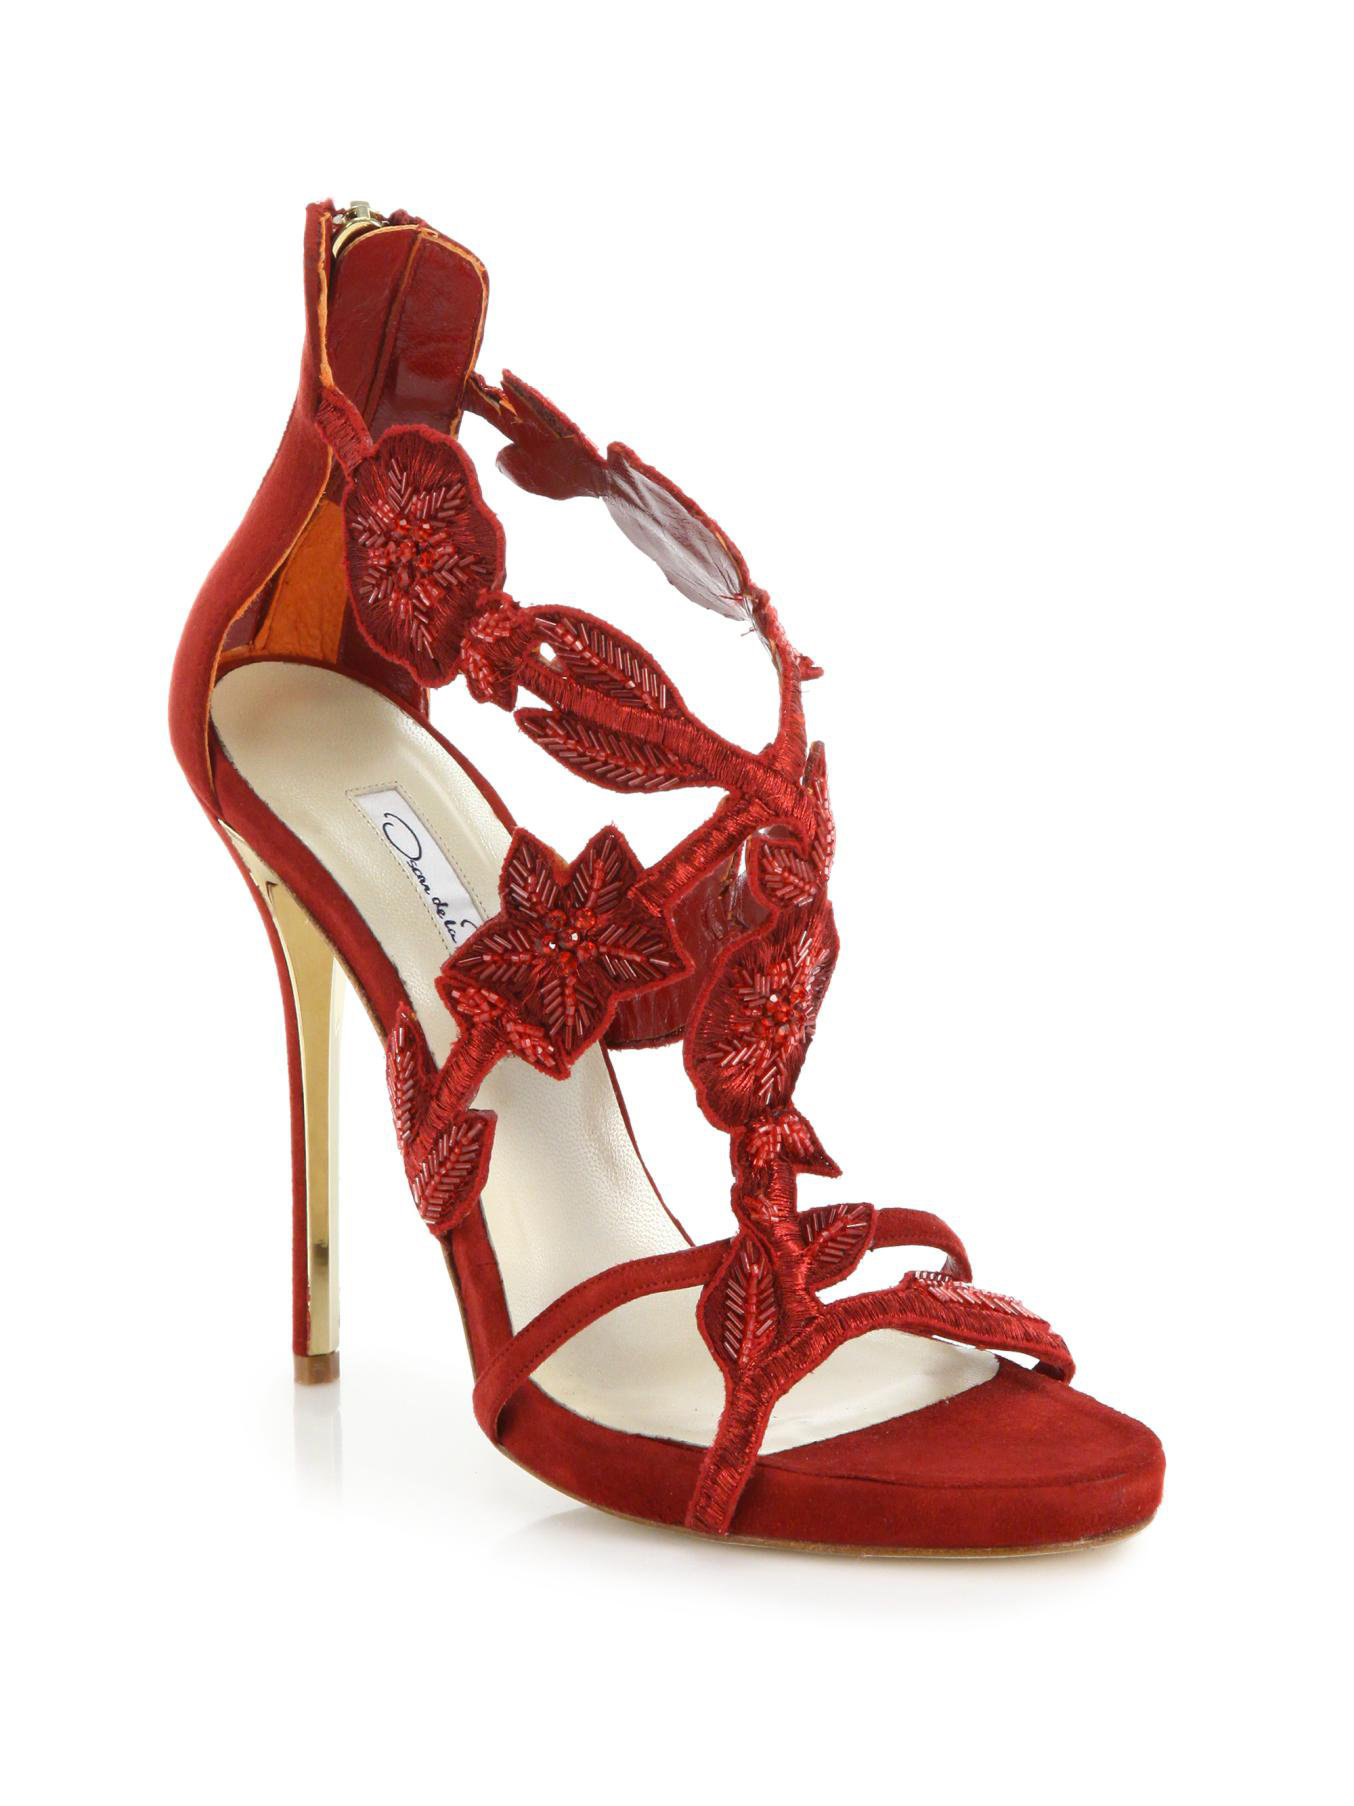 Lyst - Oscar De La Renta Tatum Embellished-Suede Sandals in Red